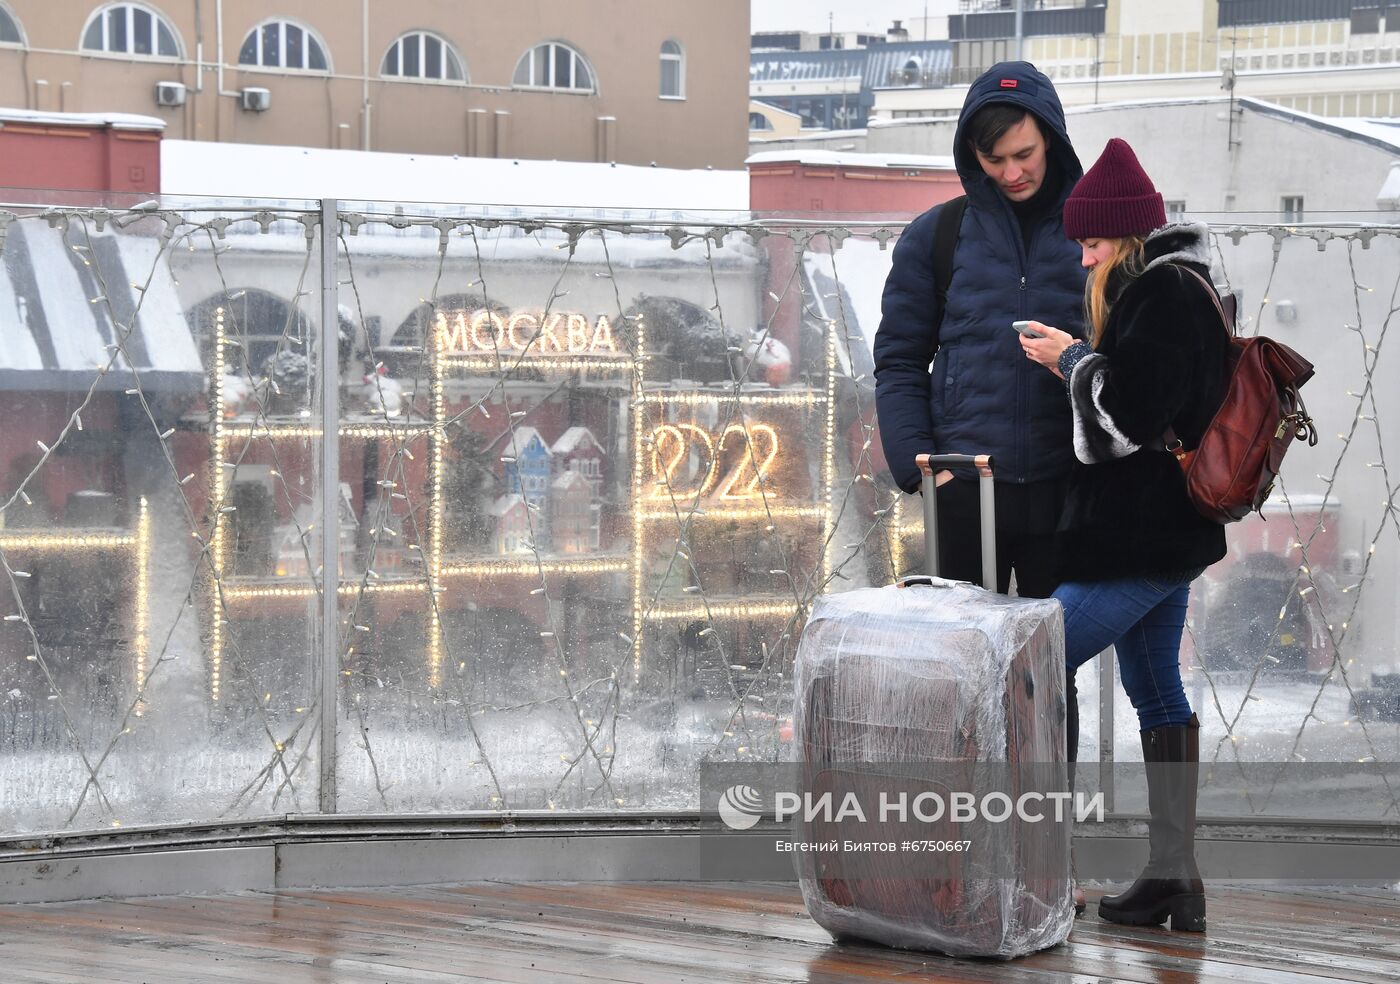 Москва во время пандемии коронавируса